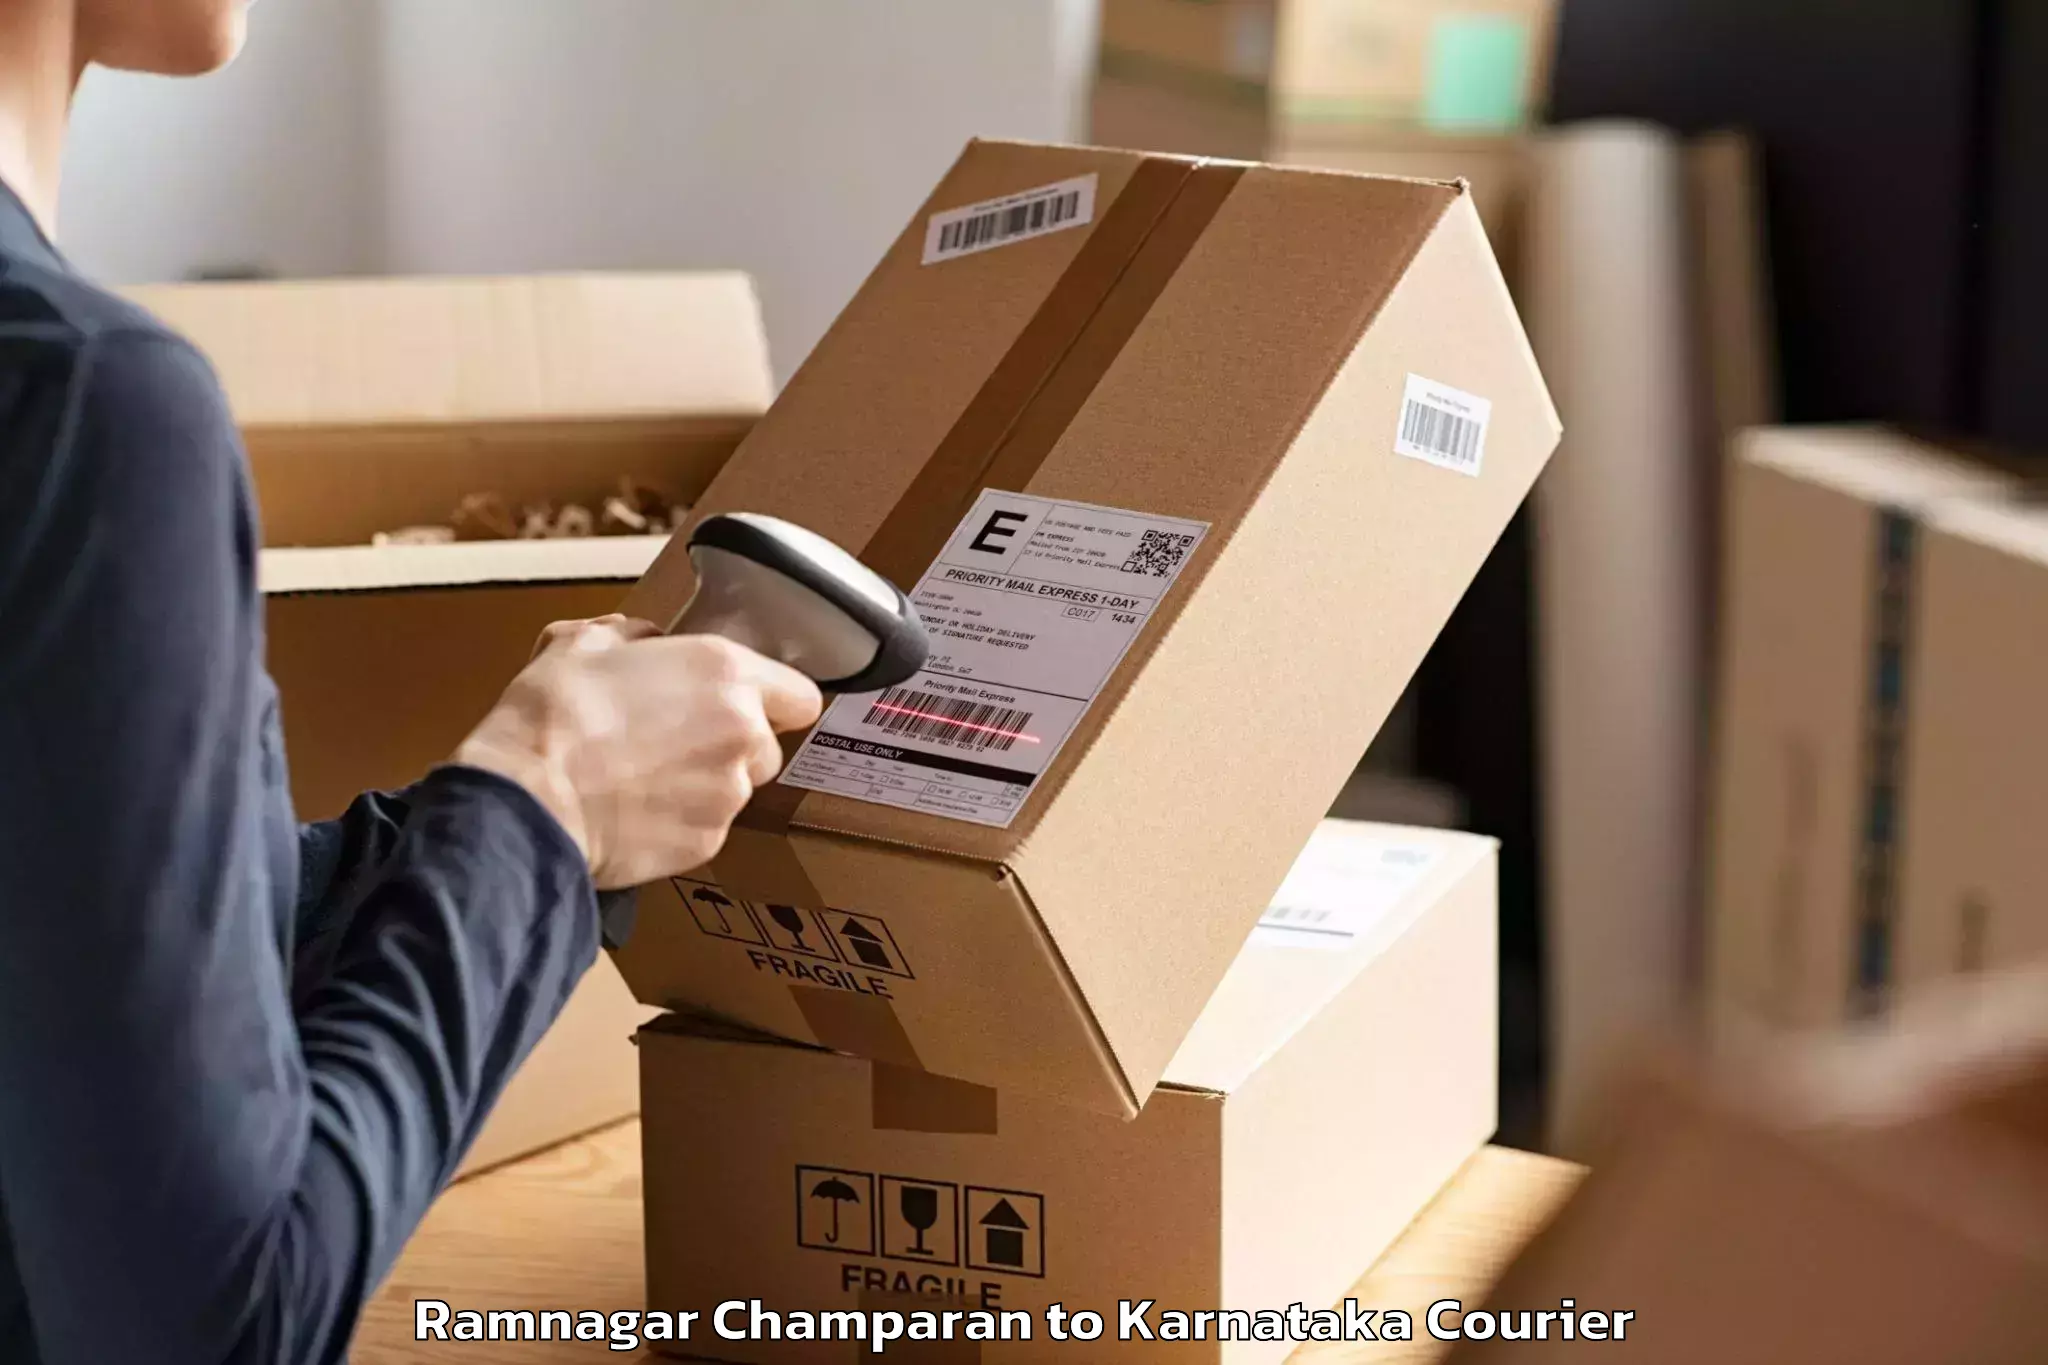 Professional furniture movers Ramnagar Champaran to Mangalore Port